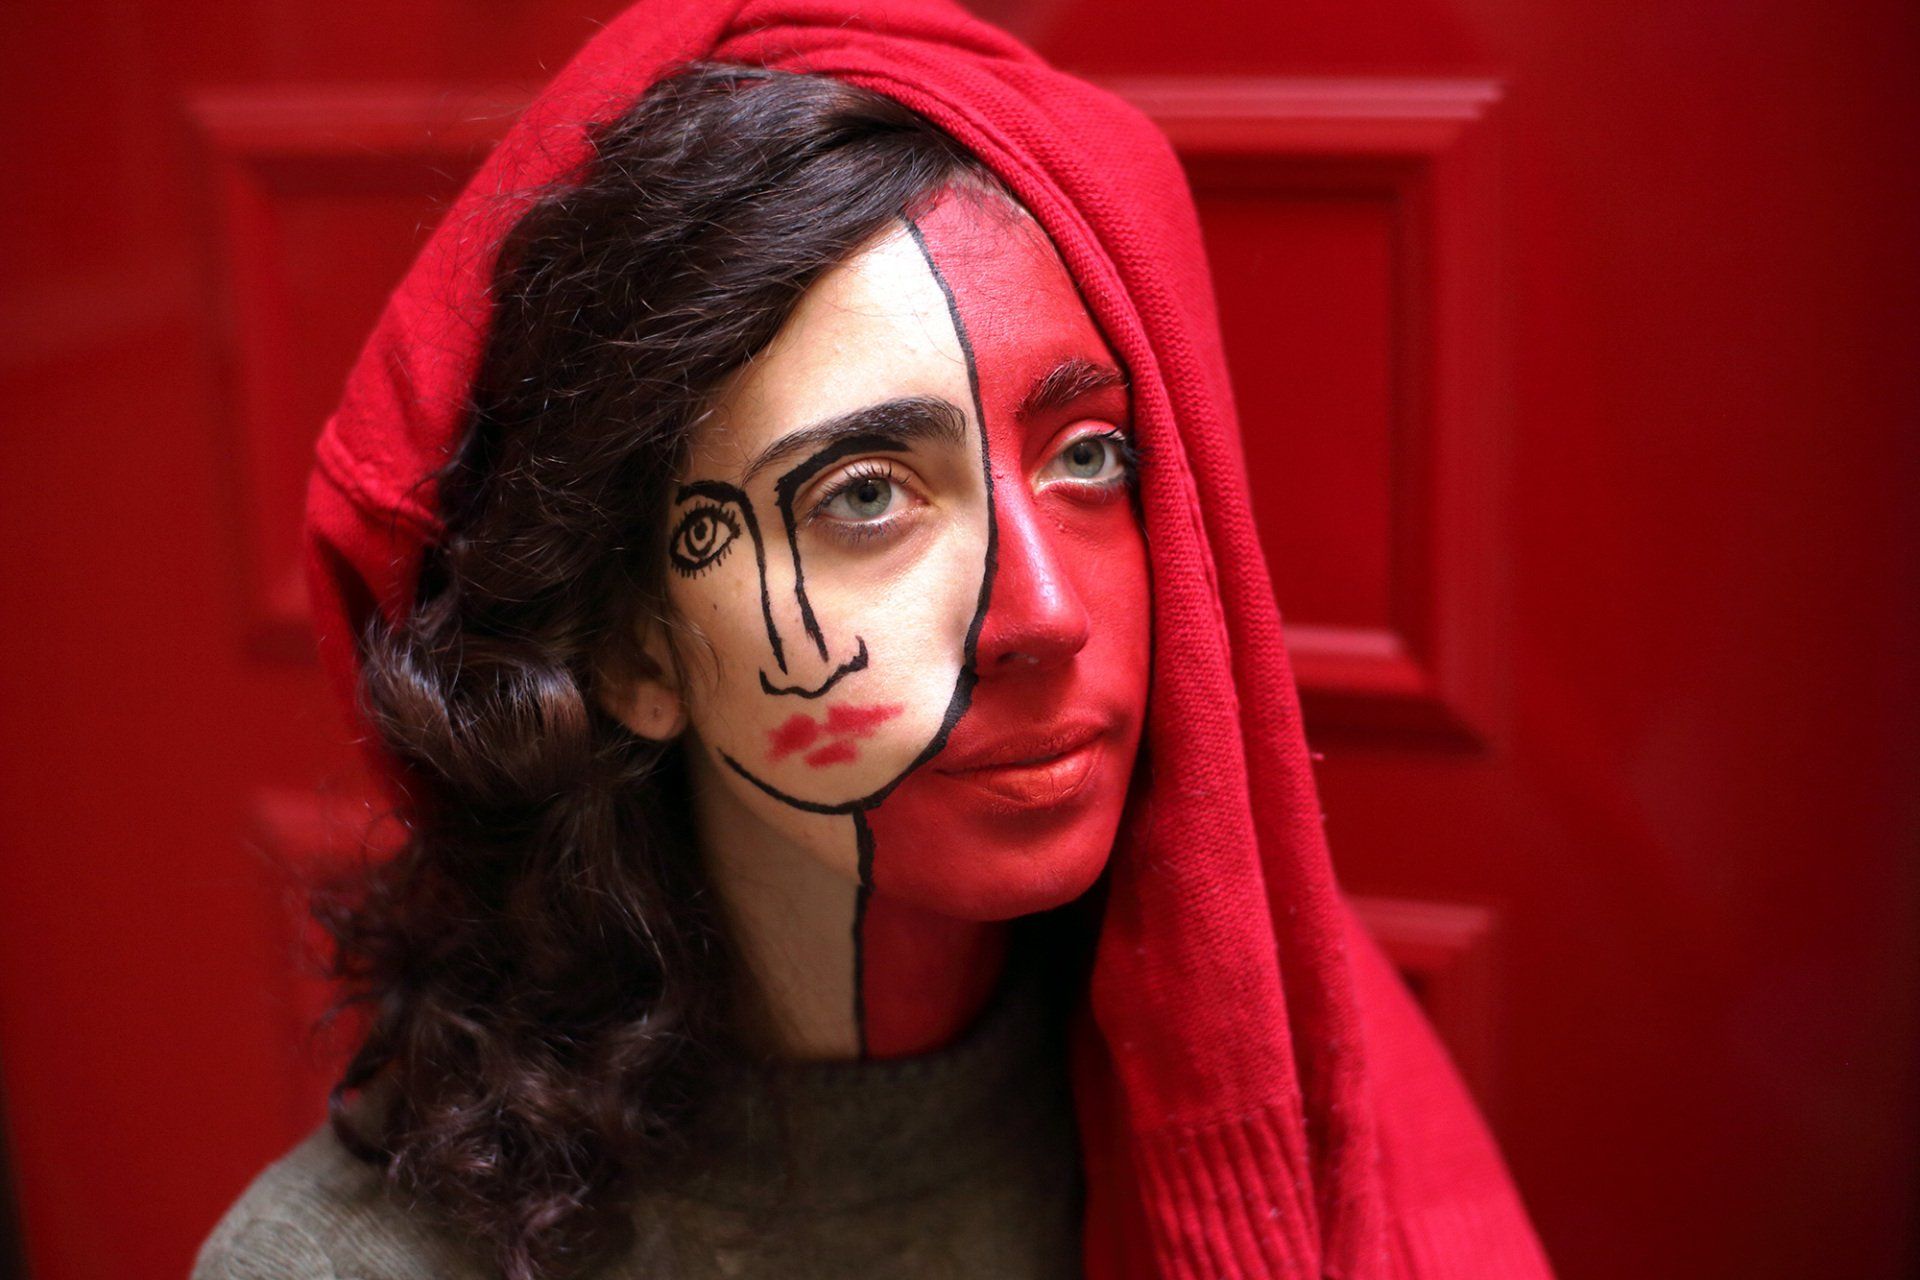 „Redface No. 2“ by Sebastian Bieniek (B1EN1EK), 2017, Rome (Italy). Model: Chiara di Carmine. Edition of 9 original photographs. 67 cm. x 100 cm. From the „Redface“ series. Oeuvre of Bieniek-Face (BieniekFace).